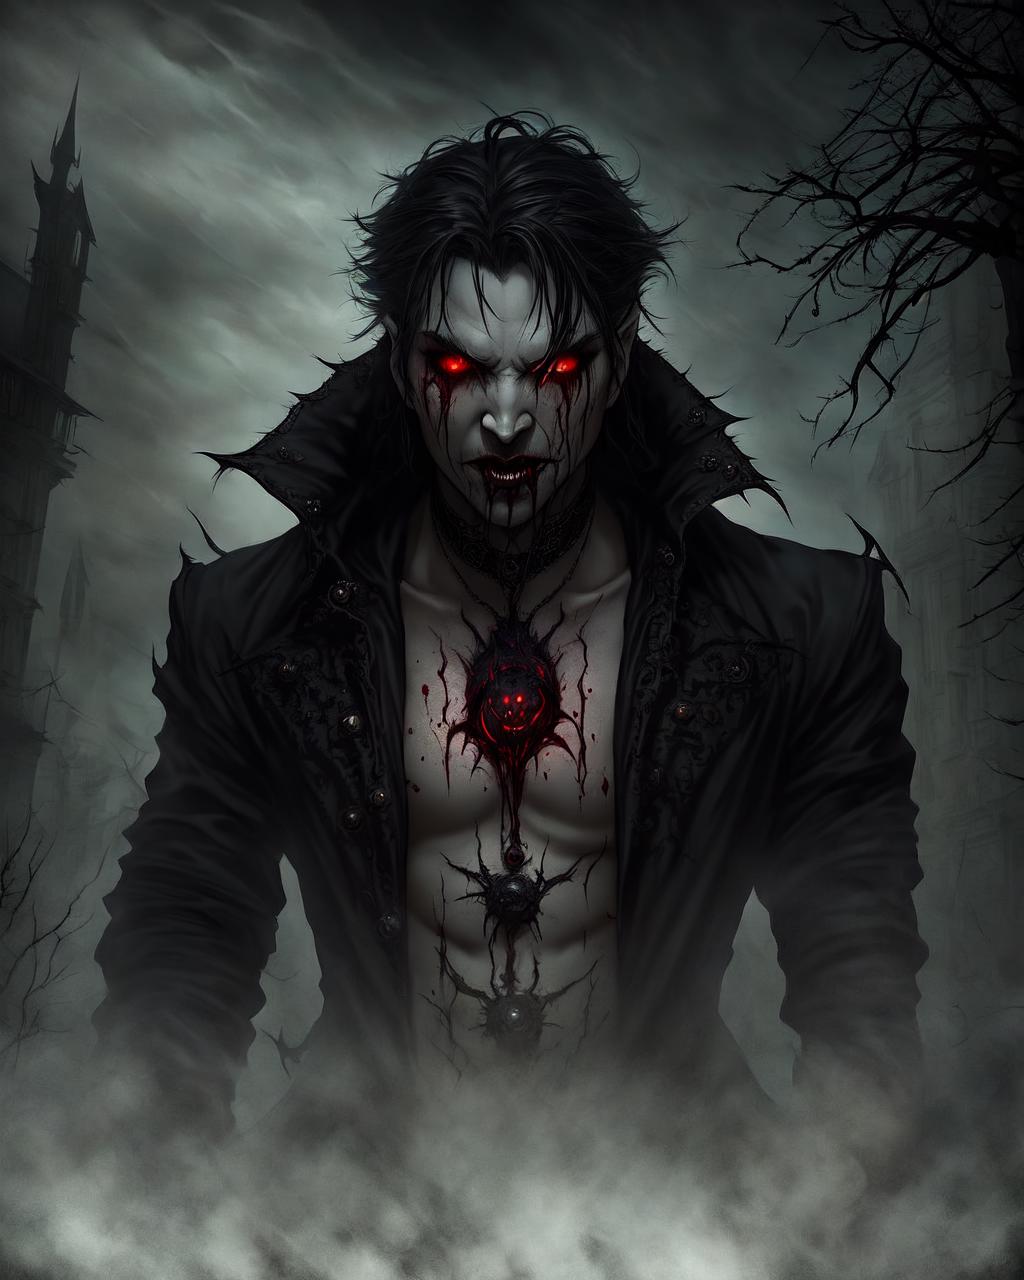 Vampire Diffusion image by junglerally_